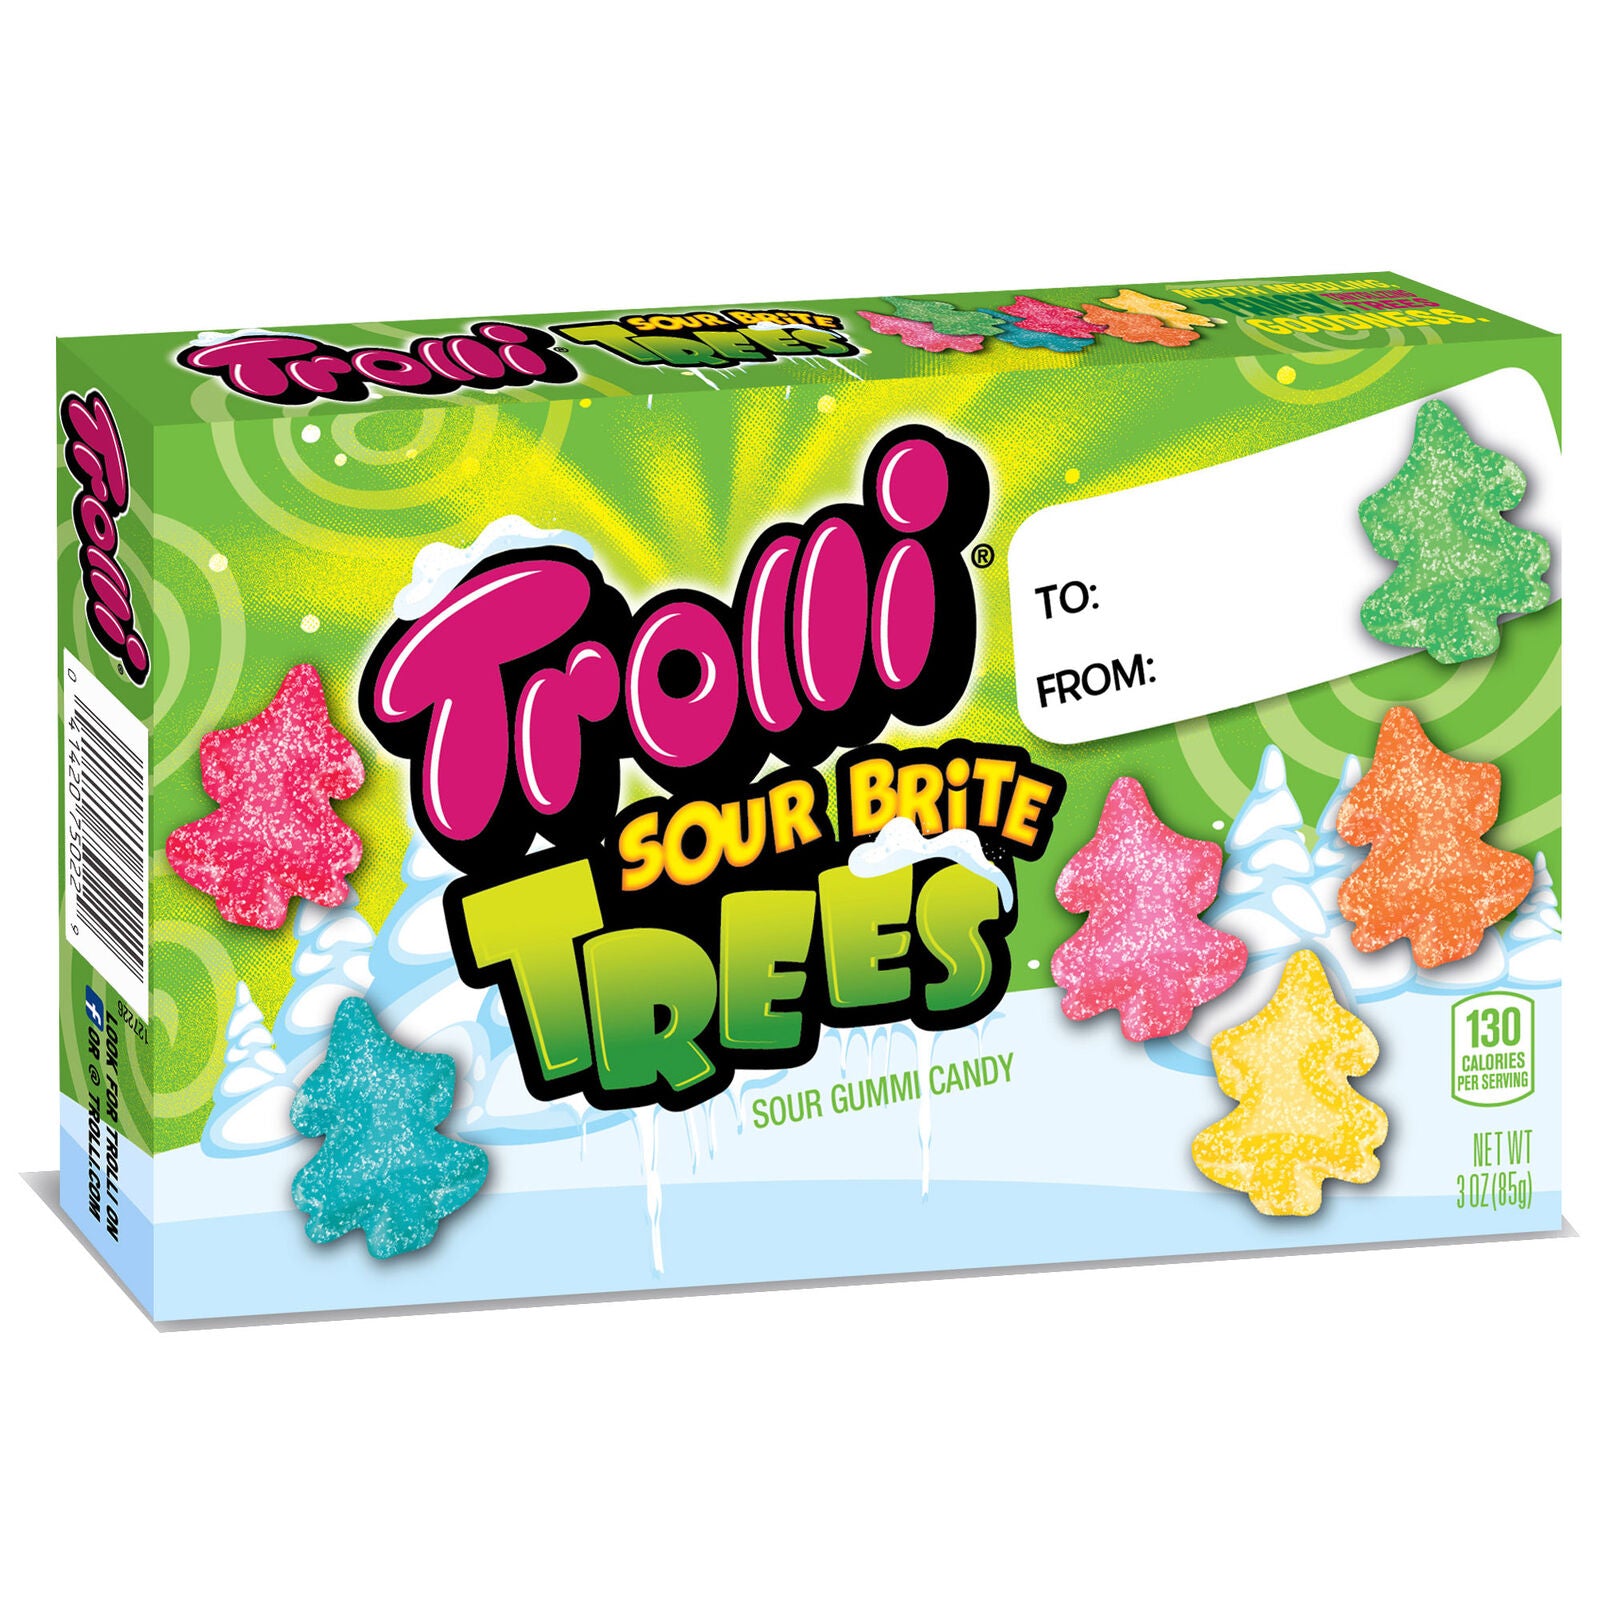 Trolli Sour Brite Trees Gummi Candy, 3oz